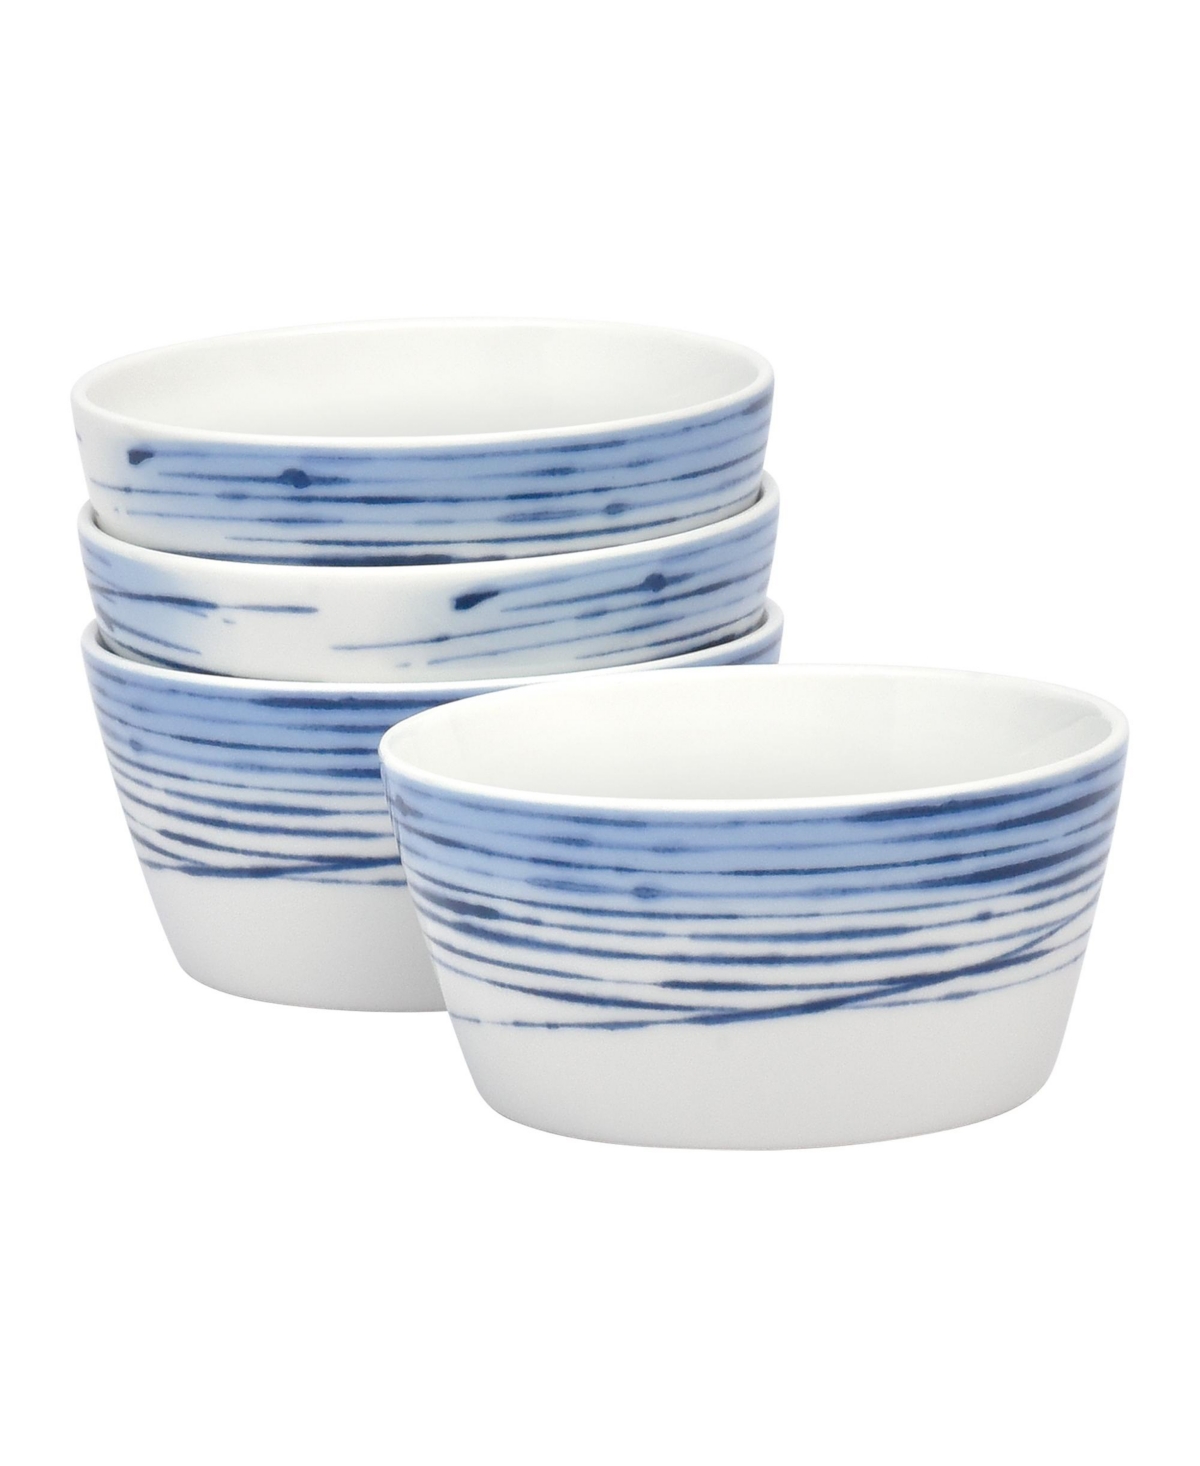 Hanabi Set/4 Cereal Bowls - White And Blue